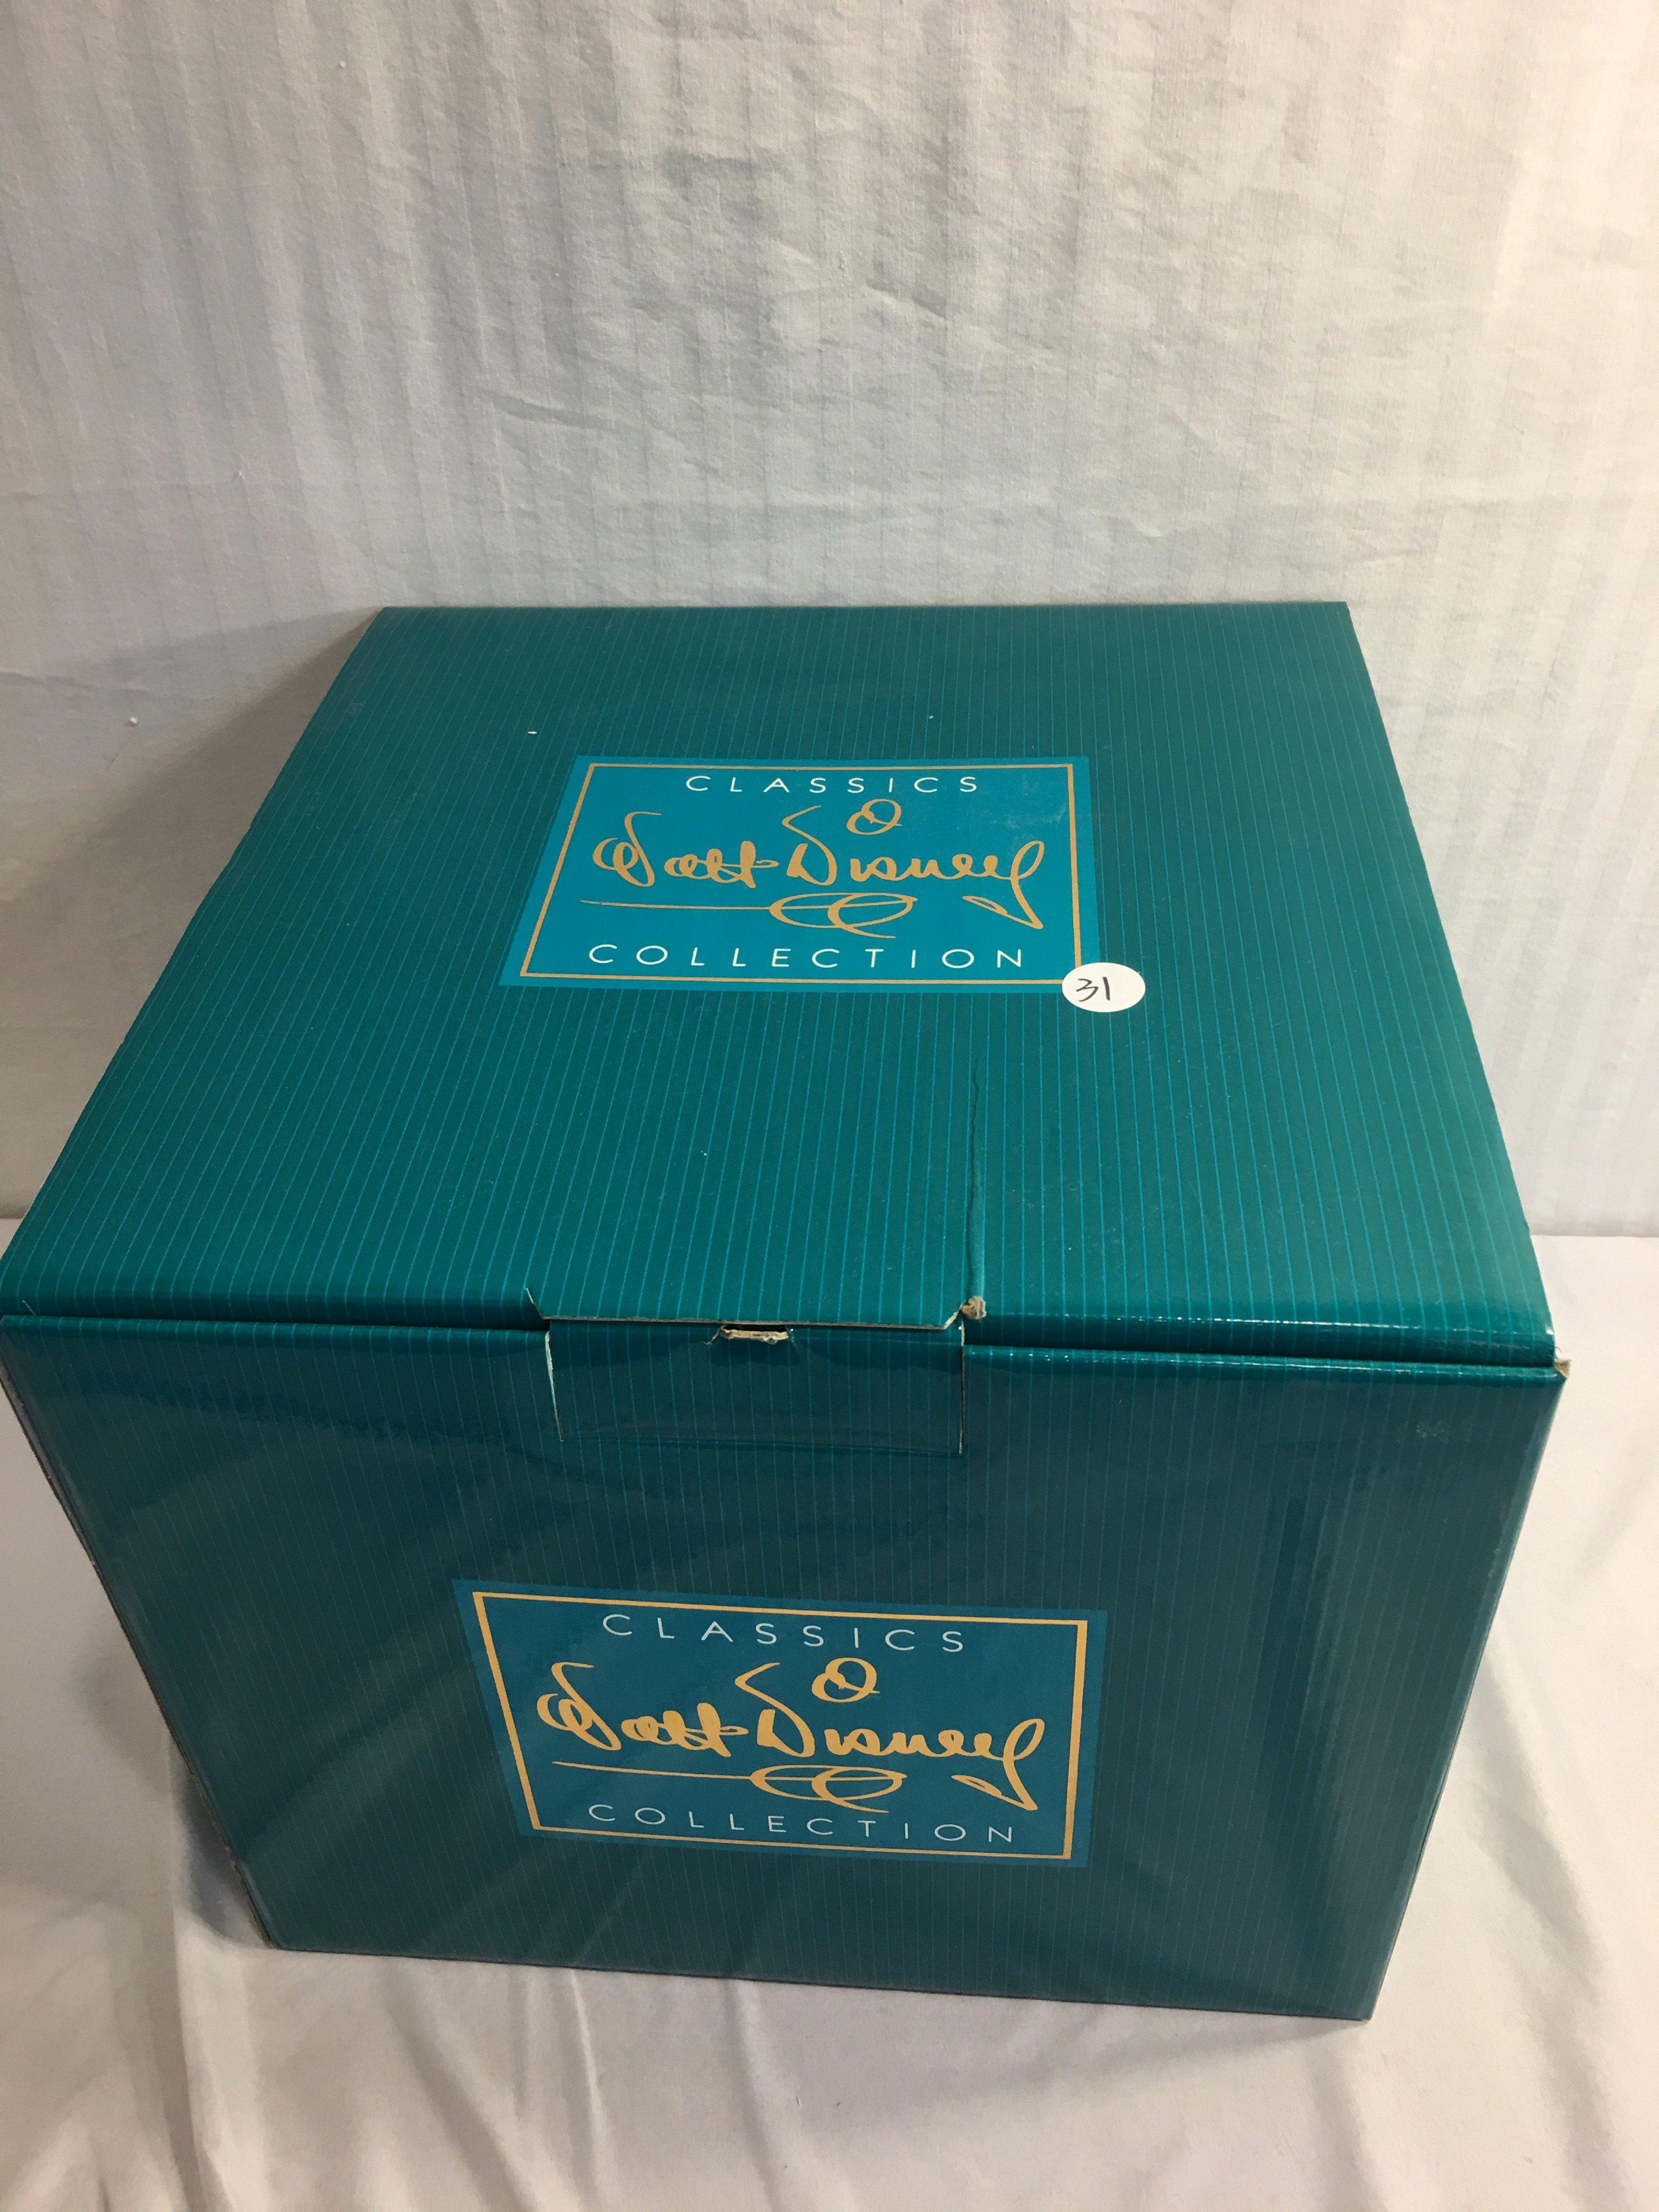 Collector new Classics Walt Disney  Good-Bye, Boo" "Sulley" Box Size:11.1/4"x12.1/4" Box